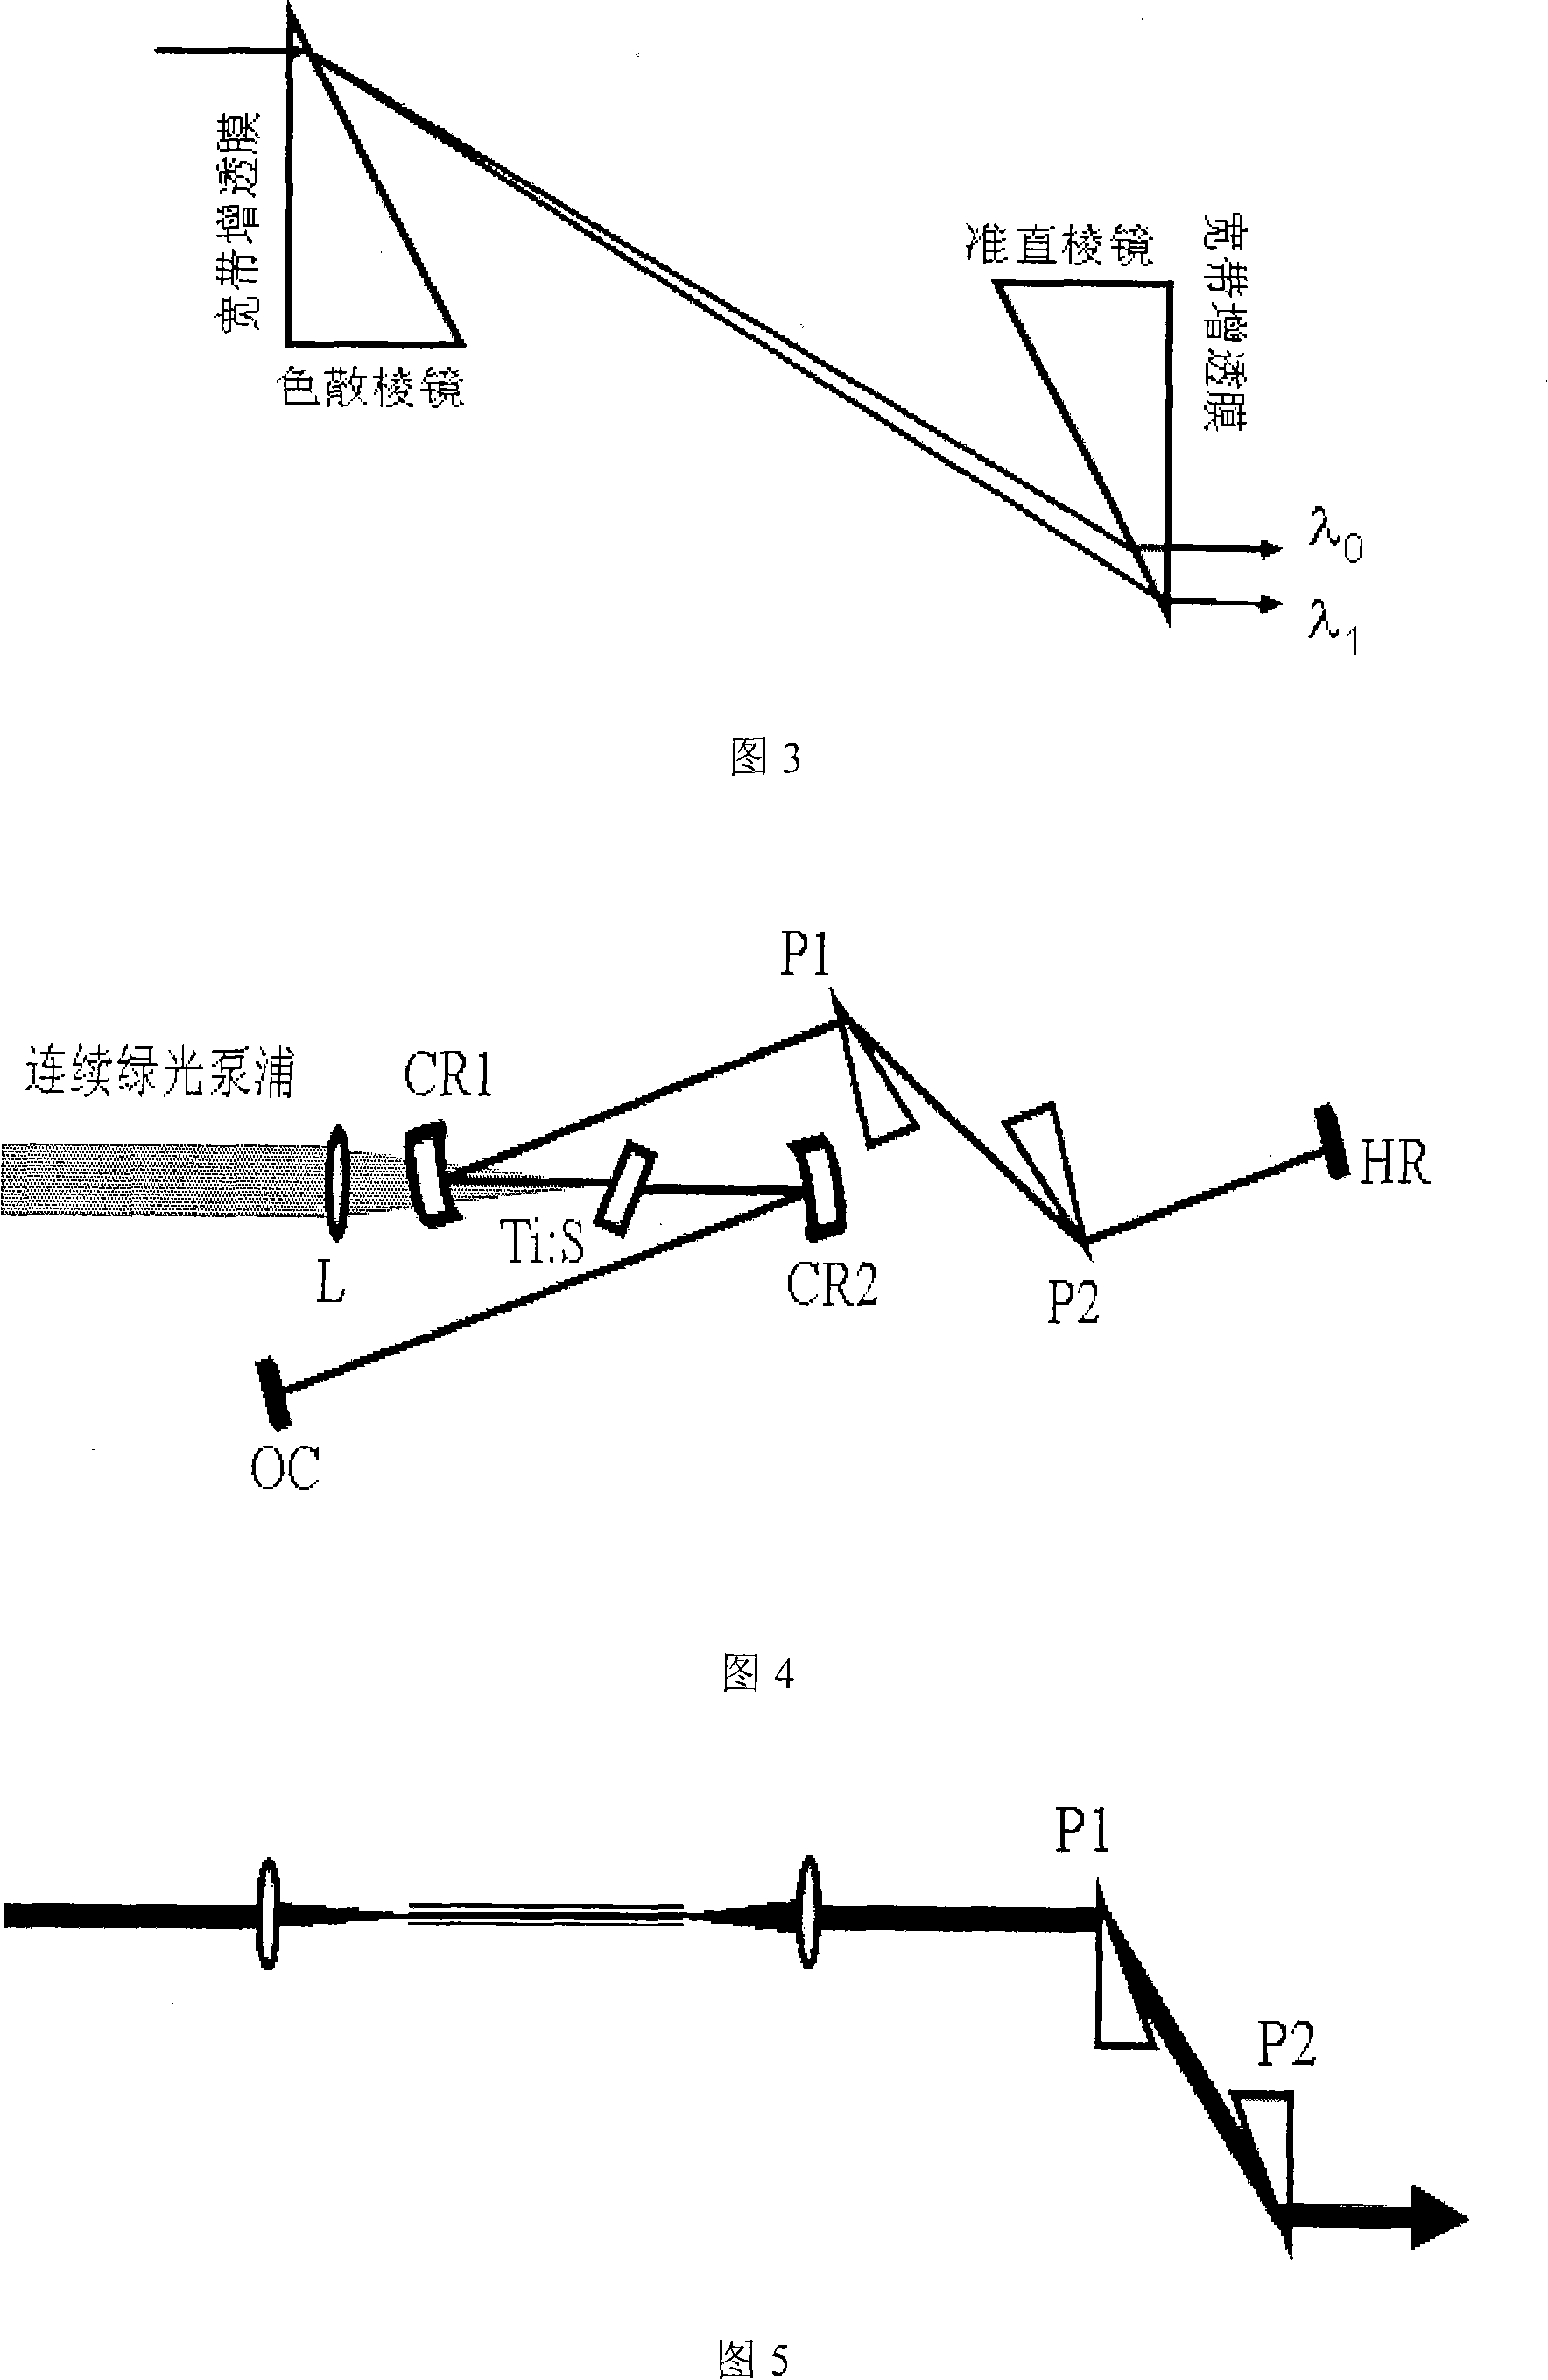 Novel prism pair pulse chromatic dispersion compensator